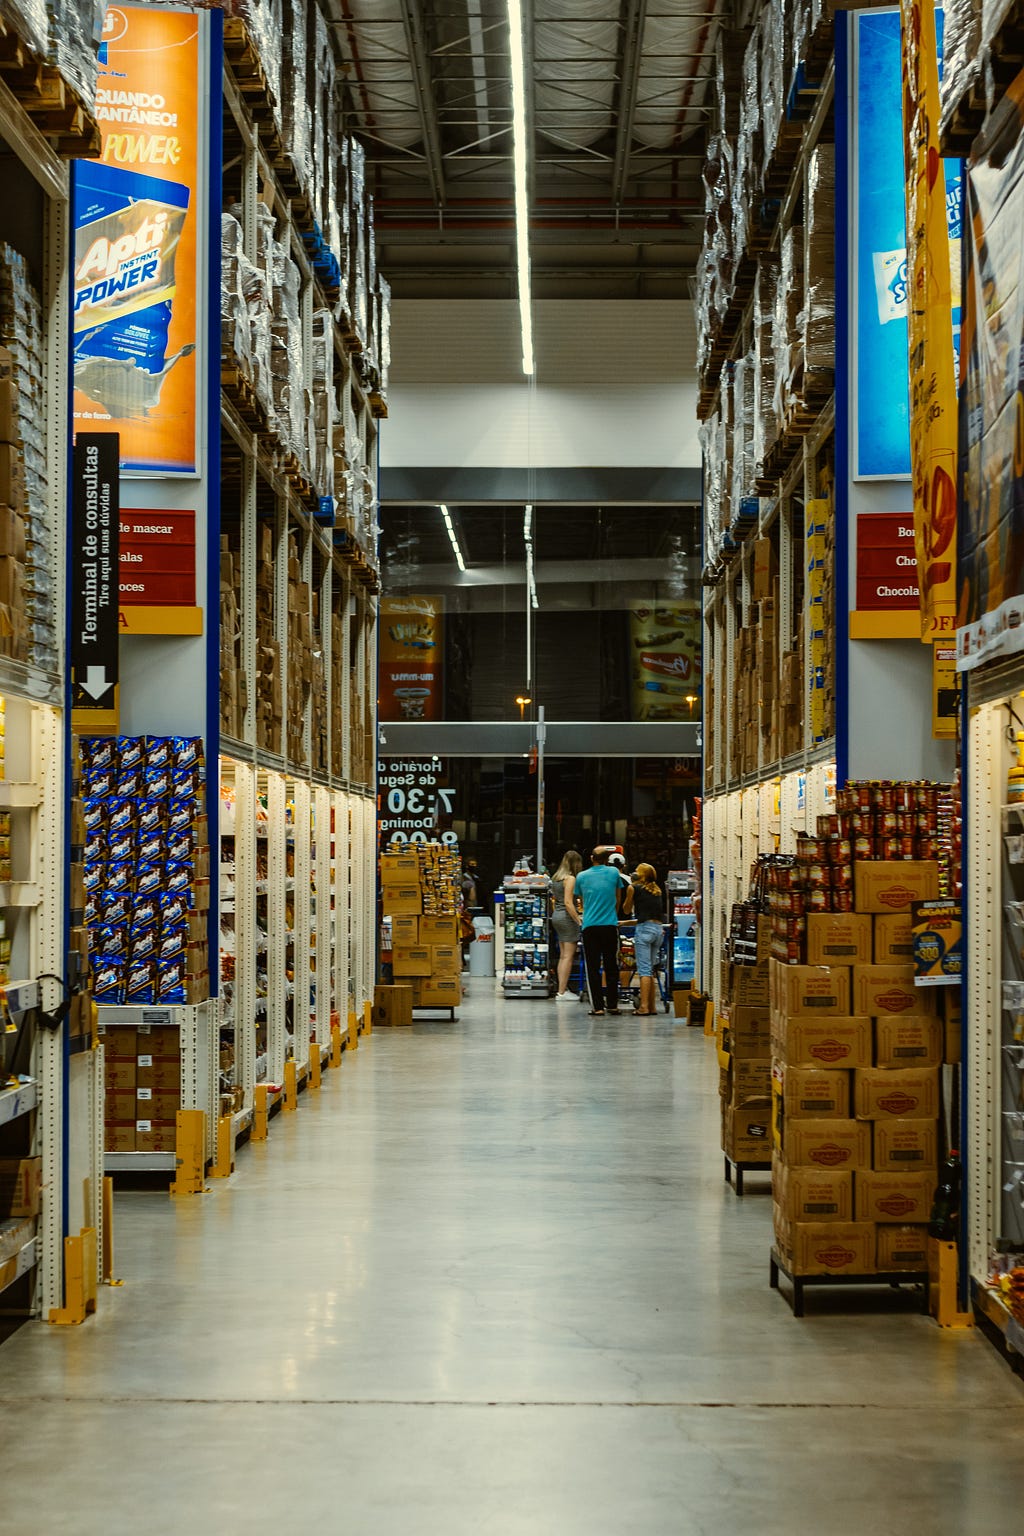 A hardware store aisle — photo courtesy of Eduardo Soares and Unsplash